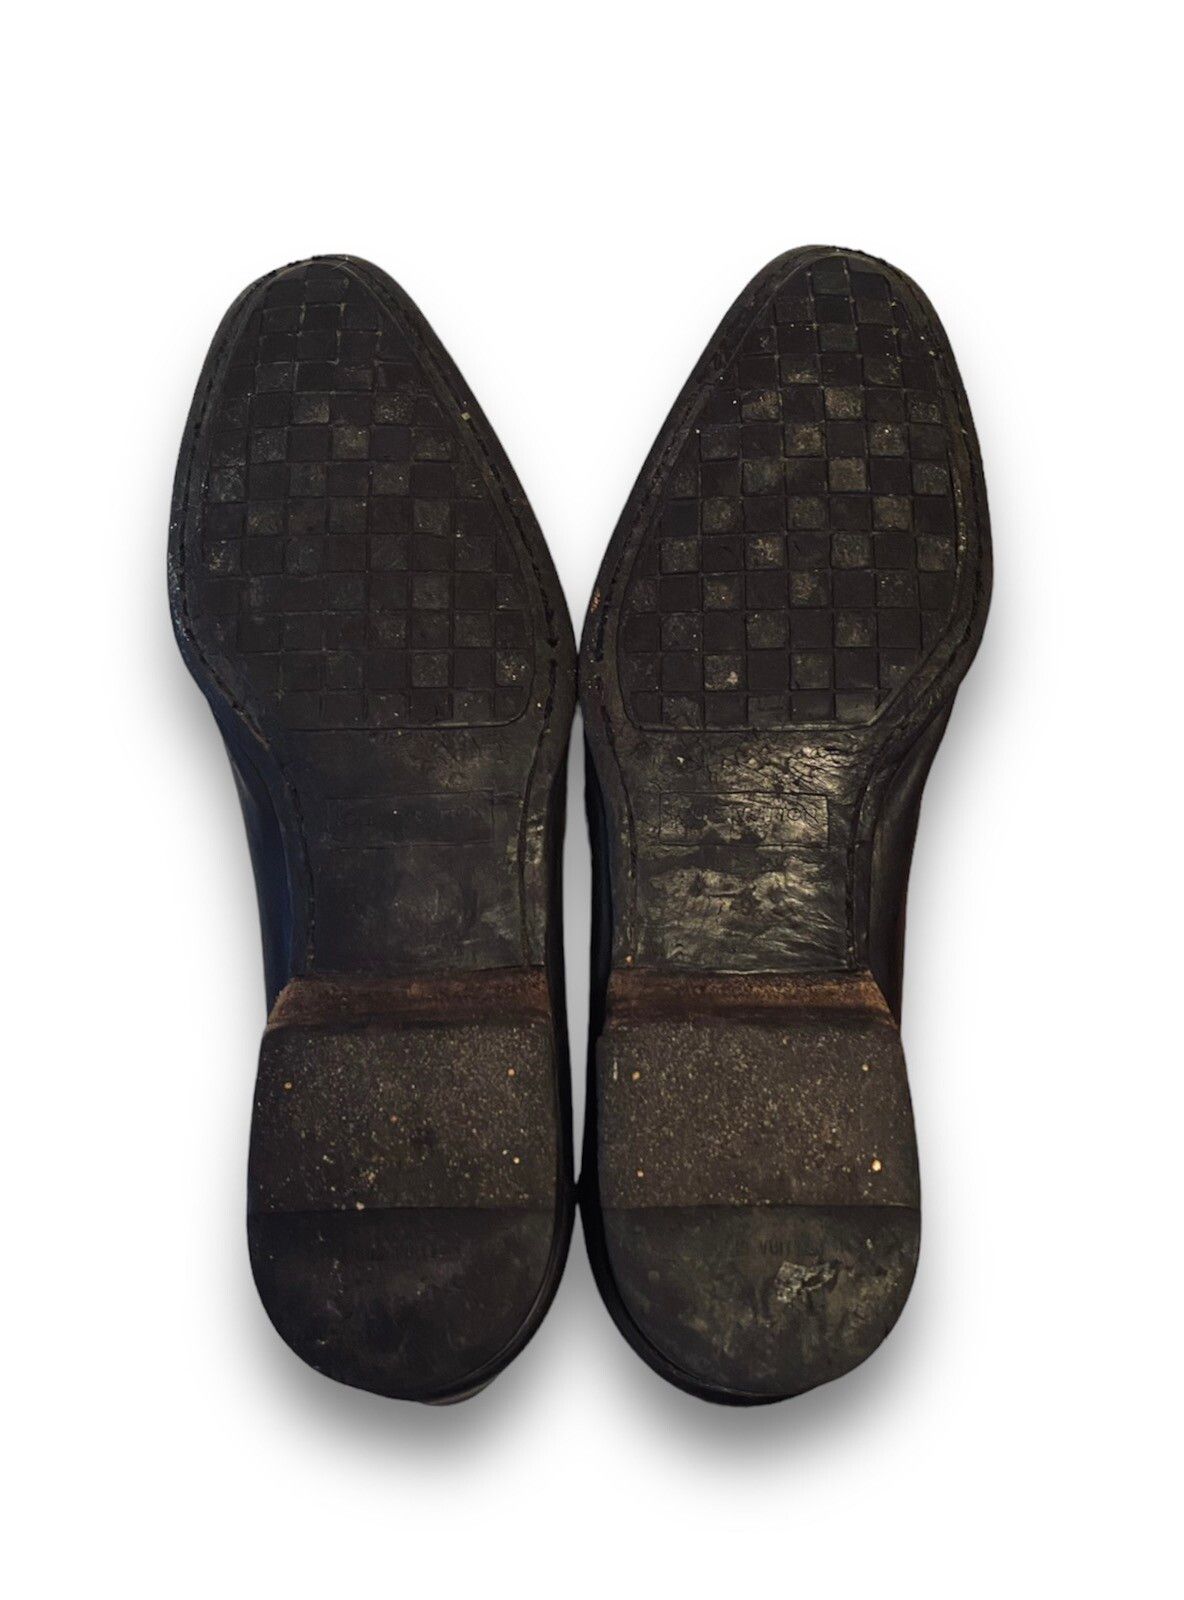 Louis Vuittons Mens Leather Derby Oxford Shoes Size US 9 - 8